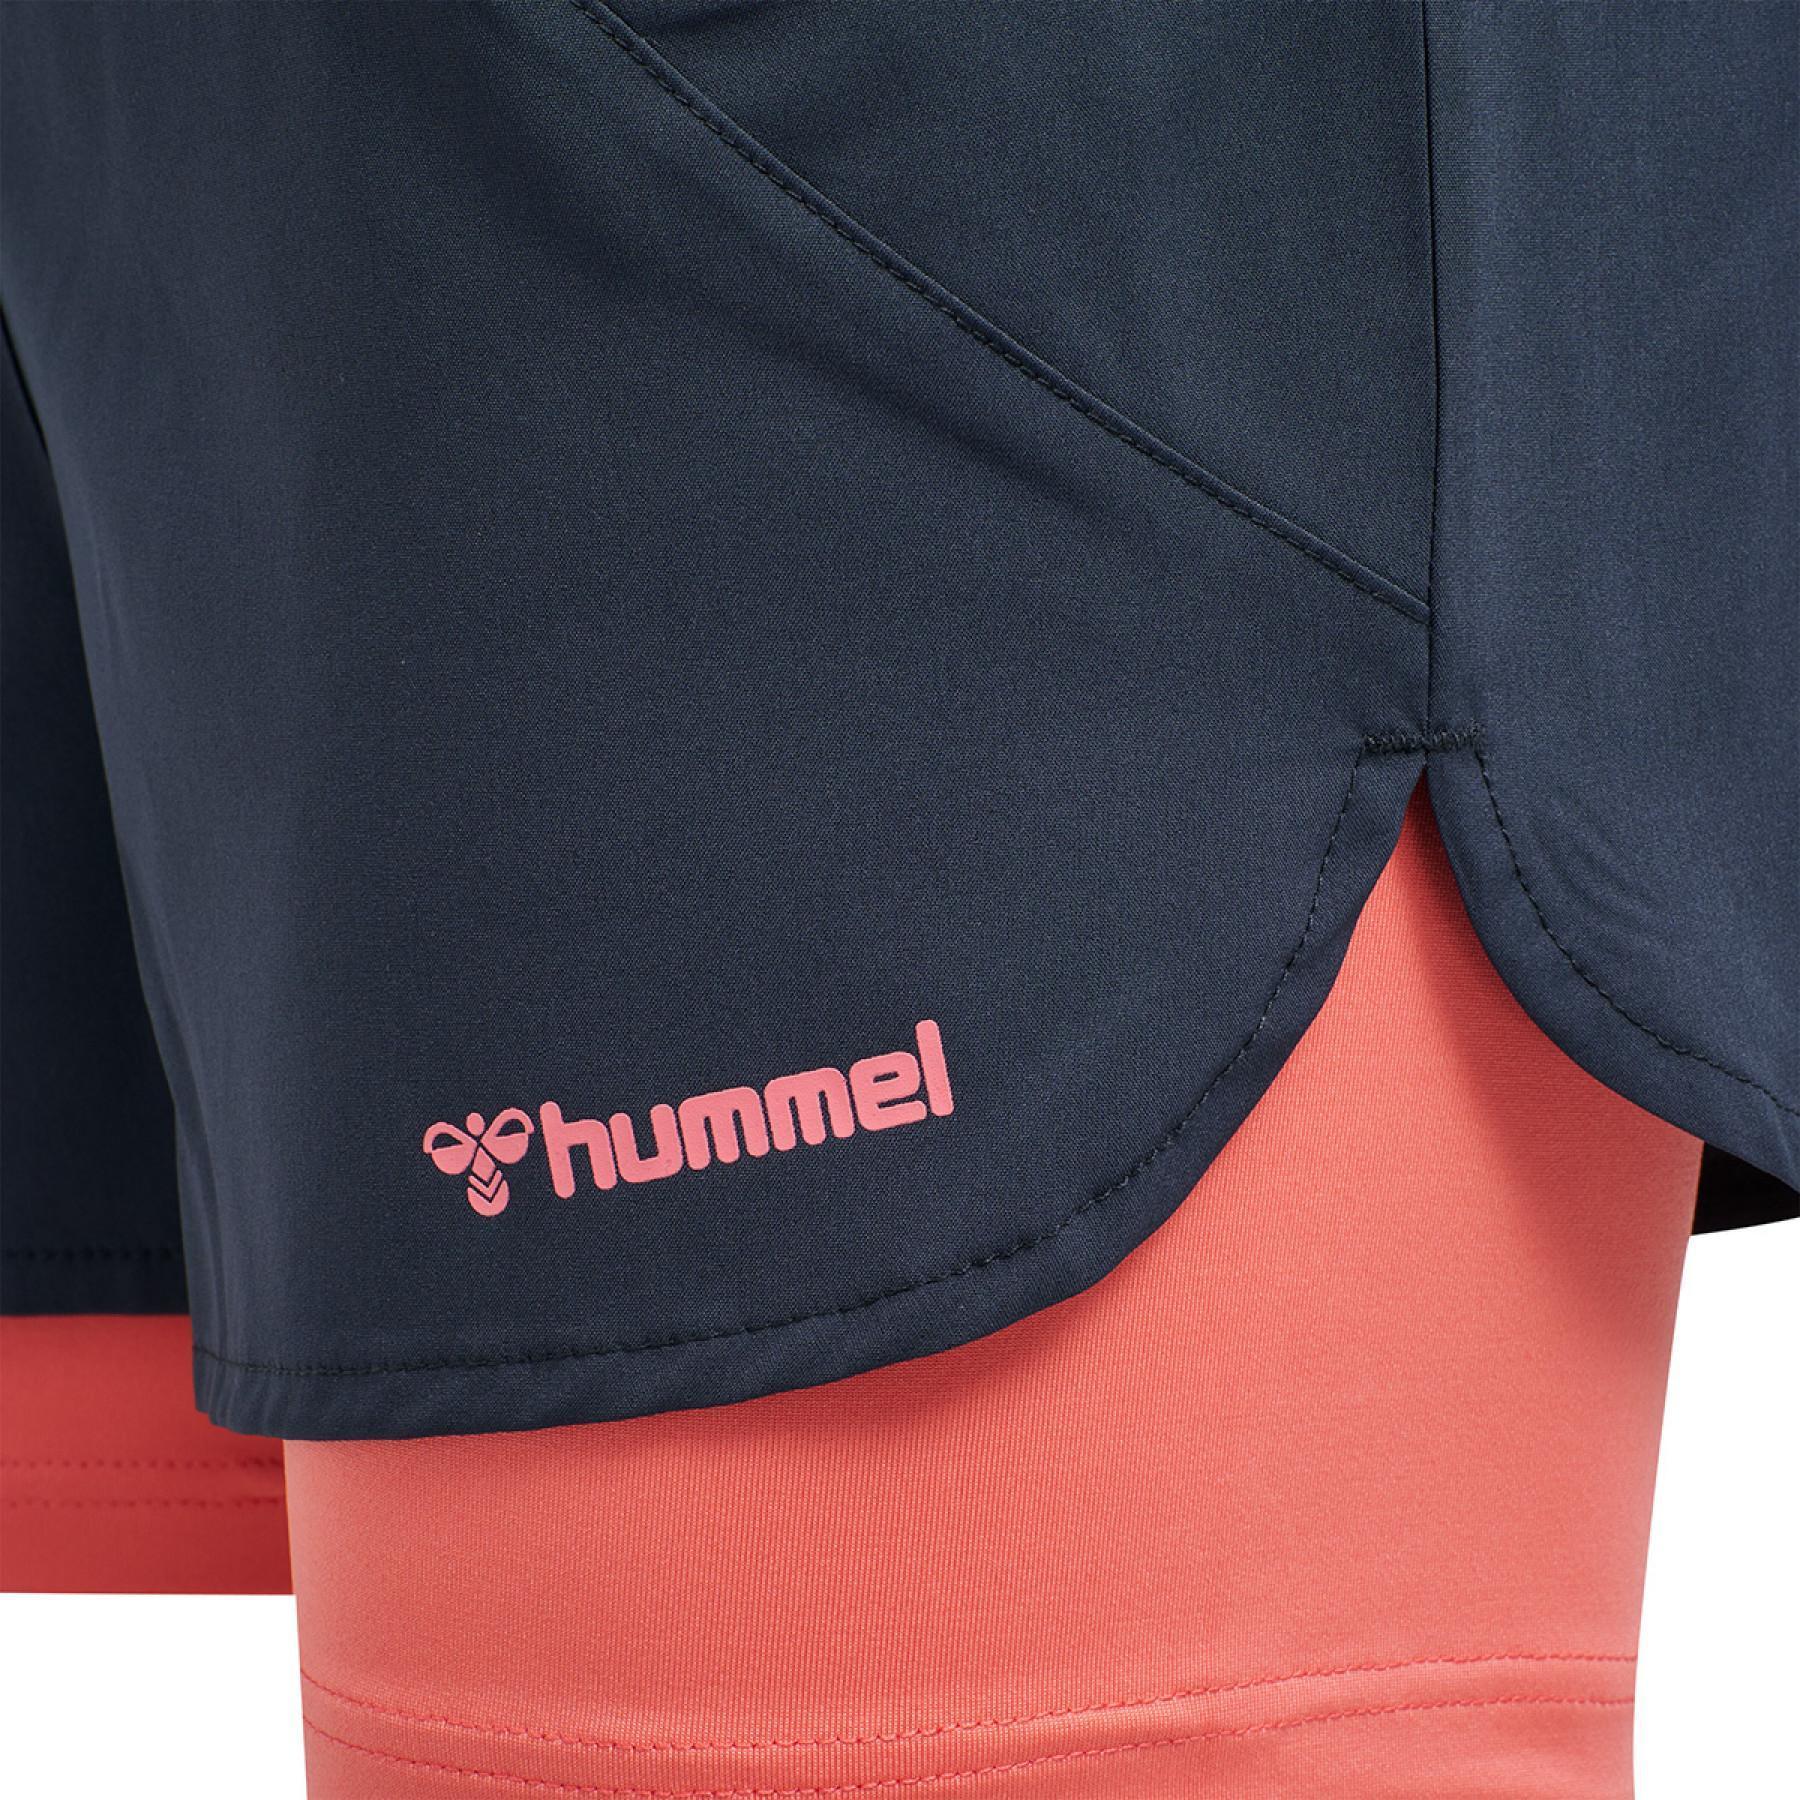 Pantalones cortos de mujer Hummel hmlvenka 2 in 1